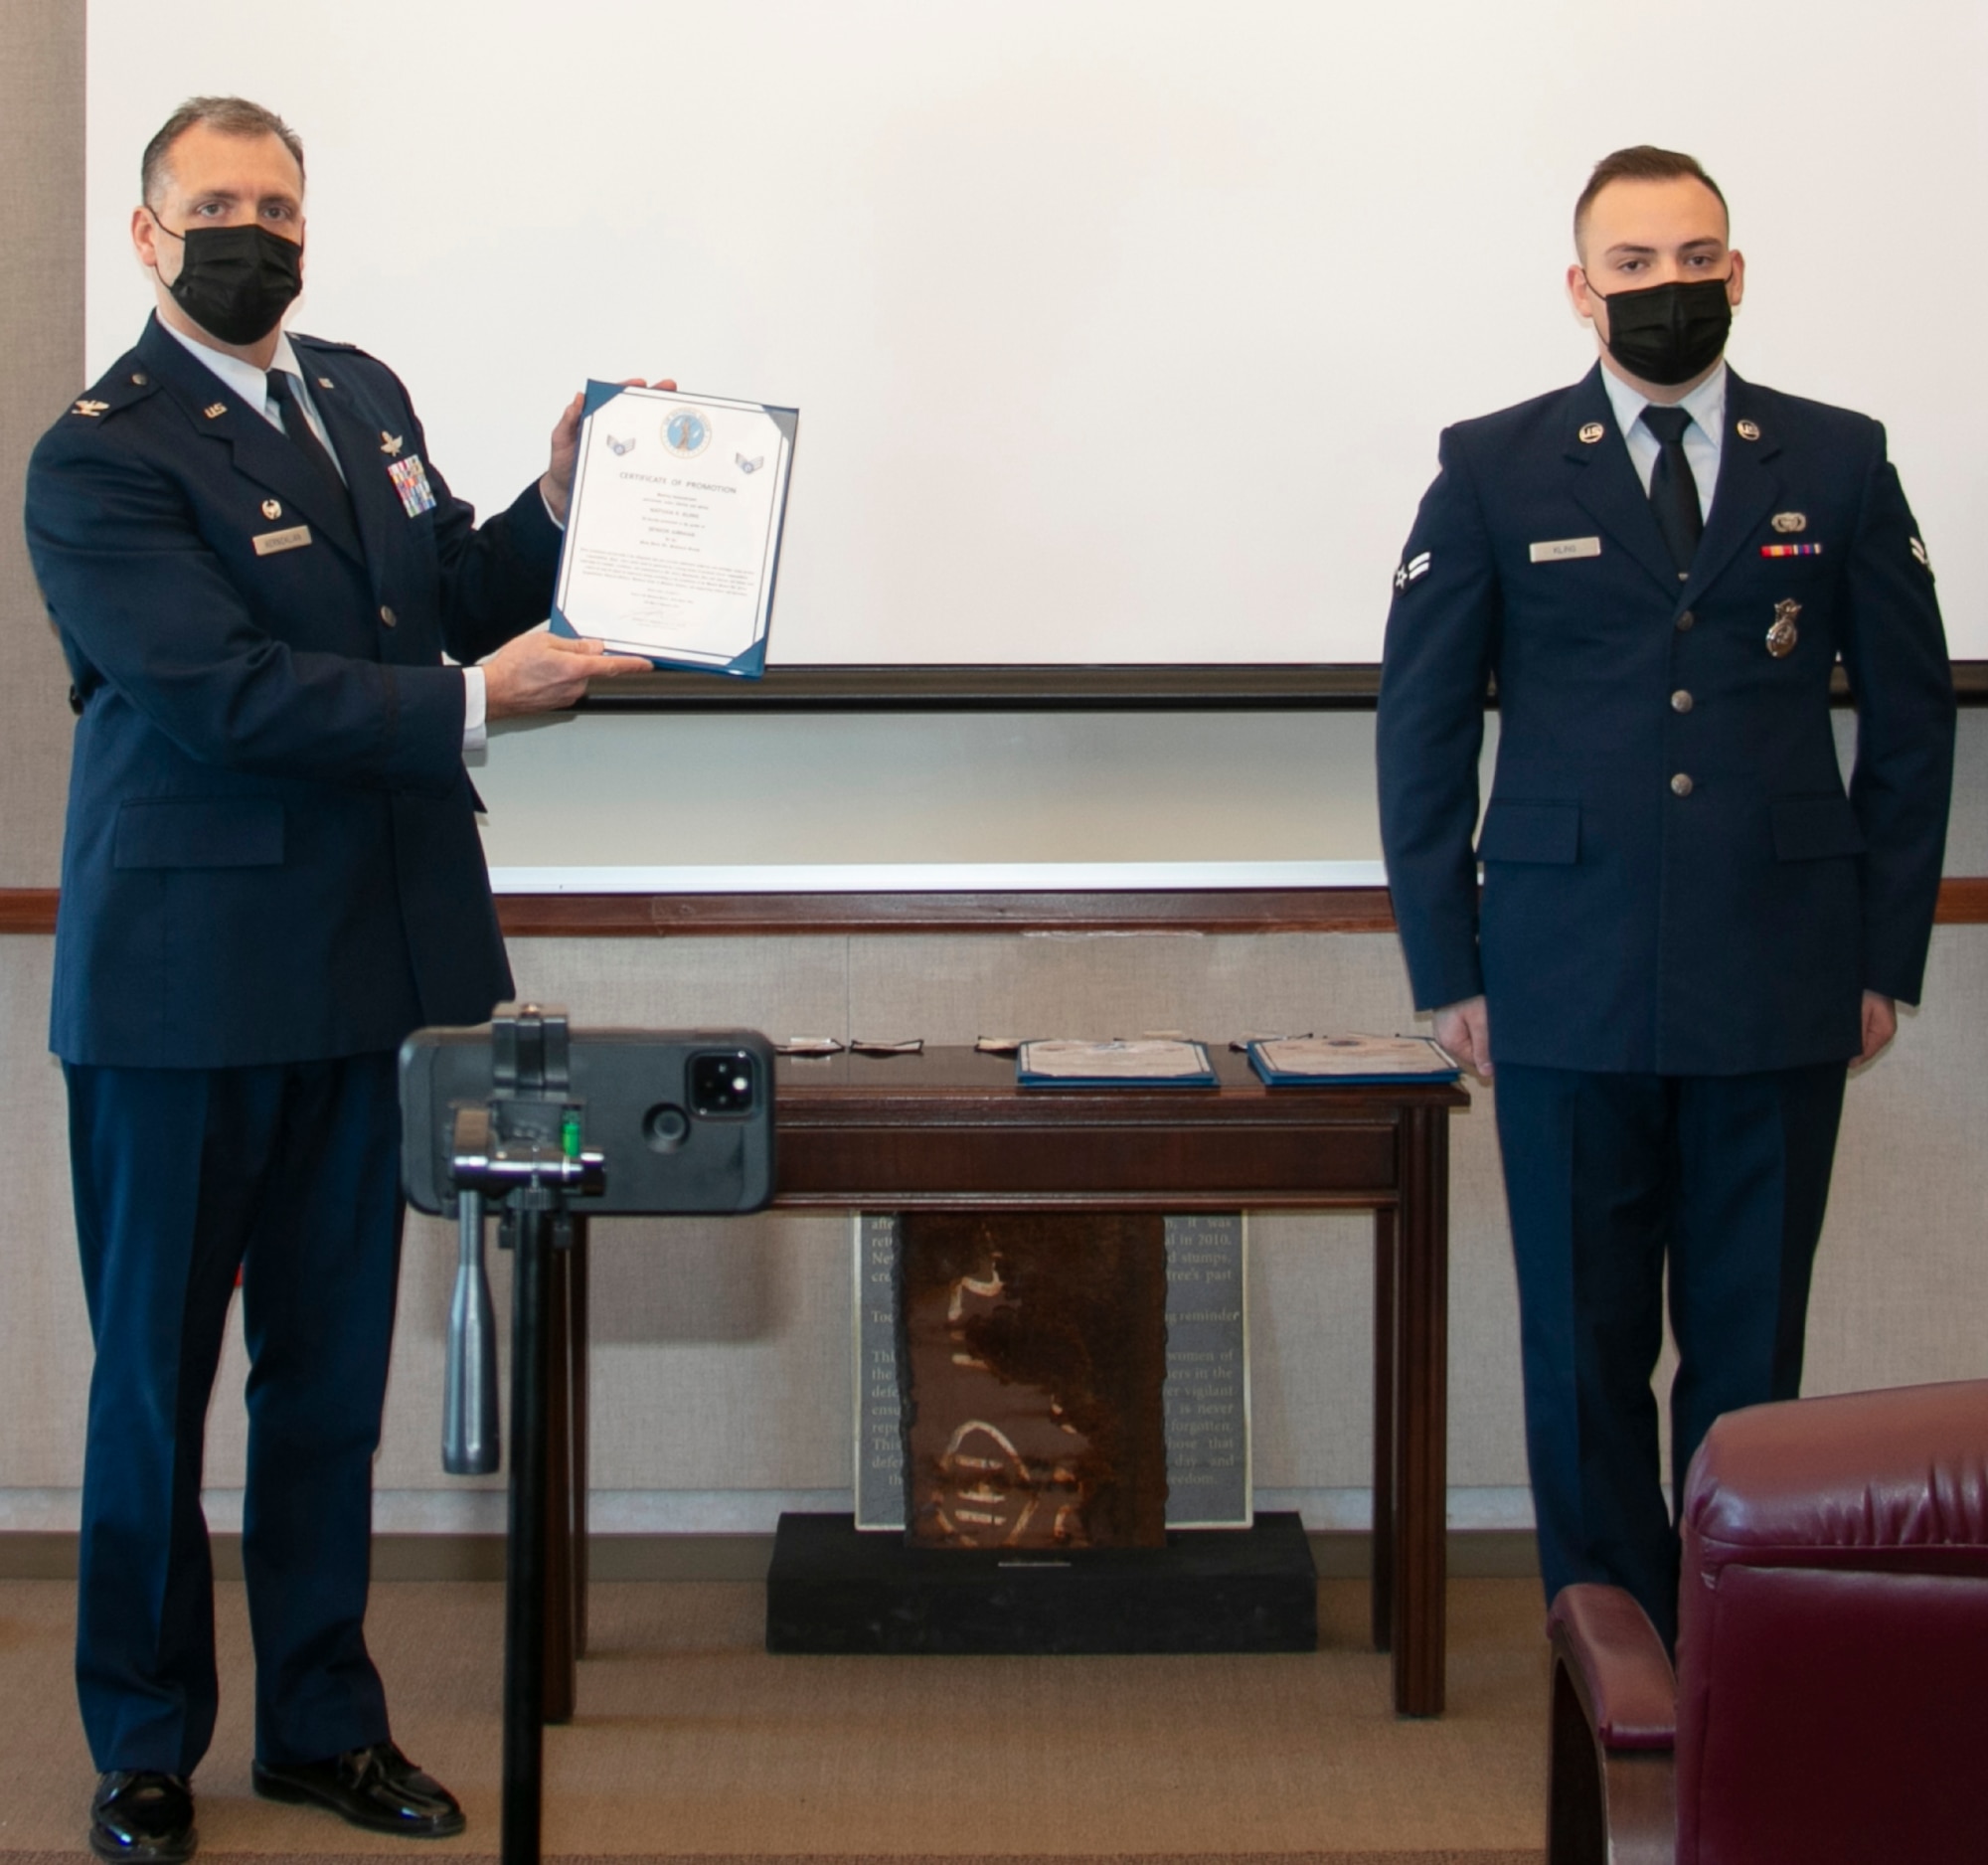 Kling promoted to senior airman